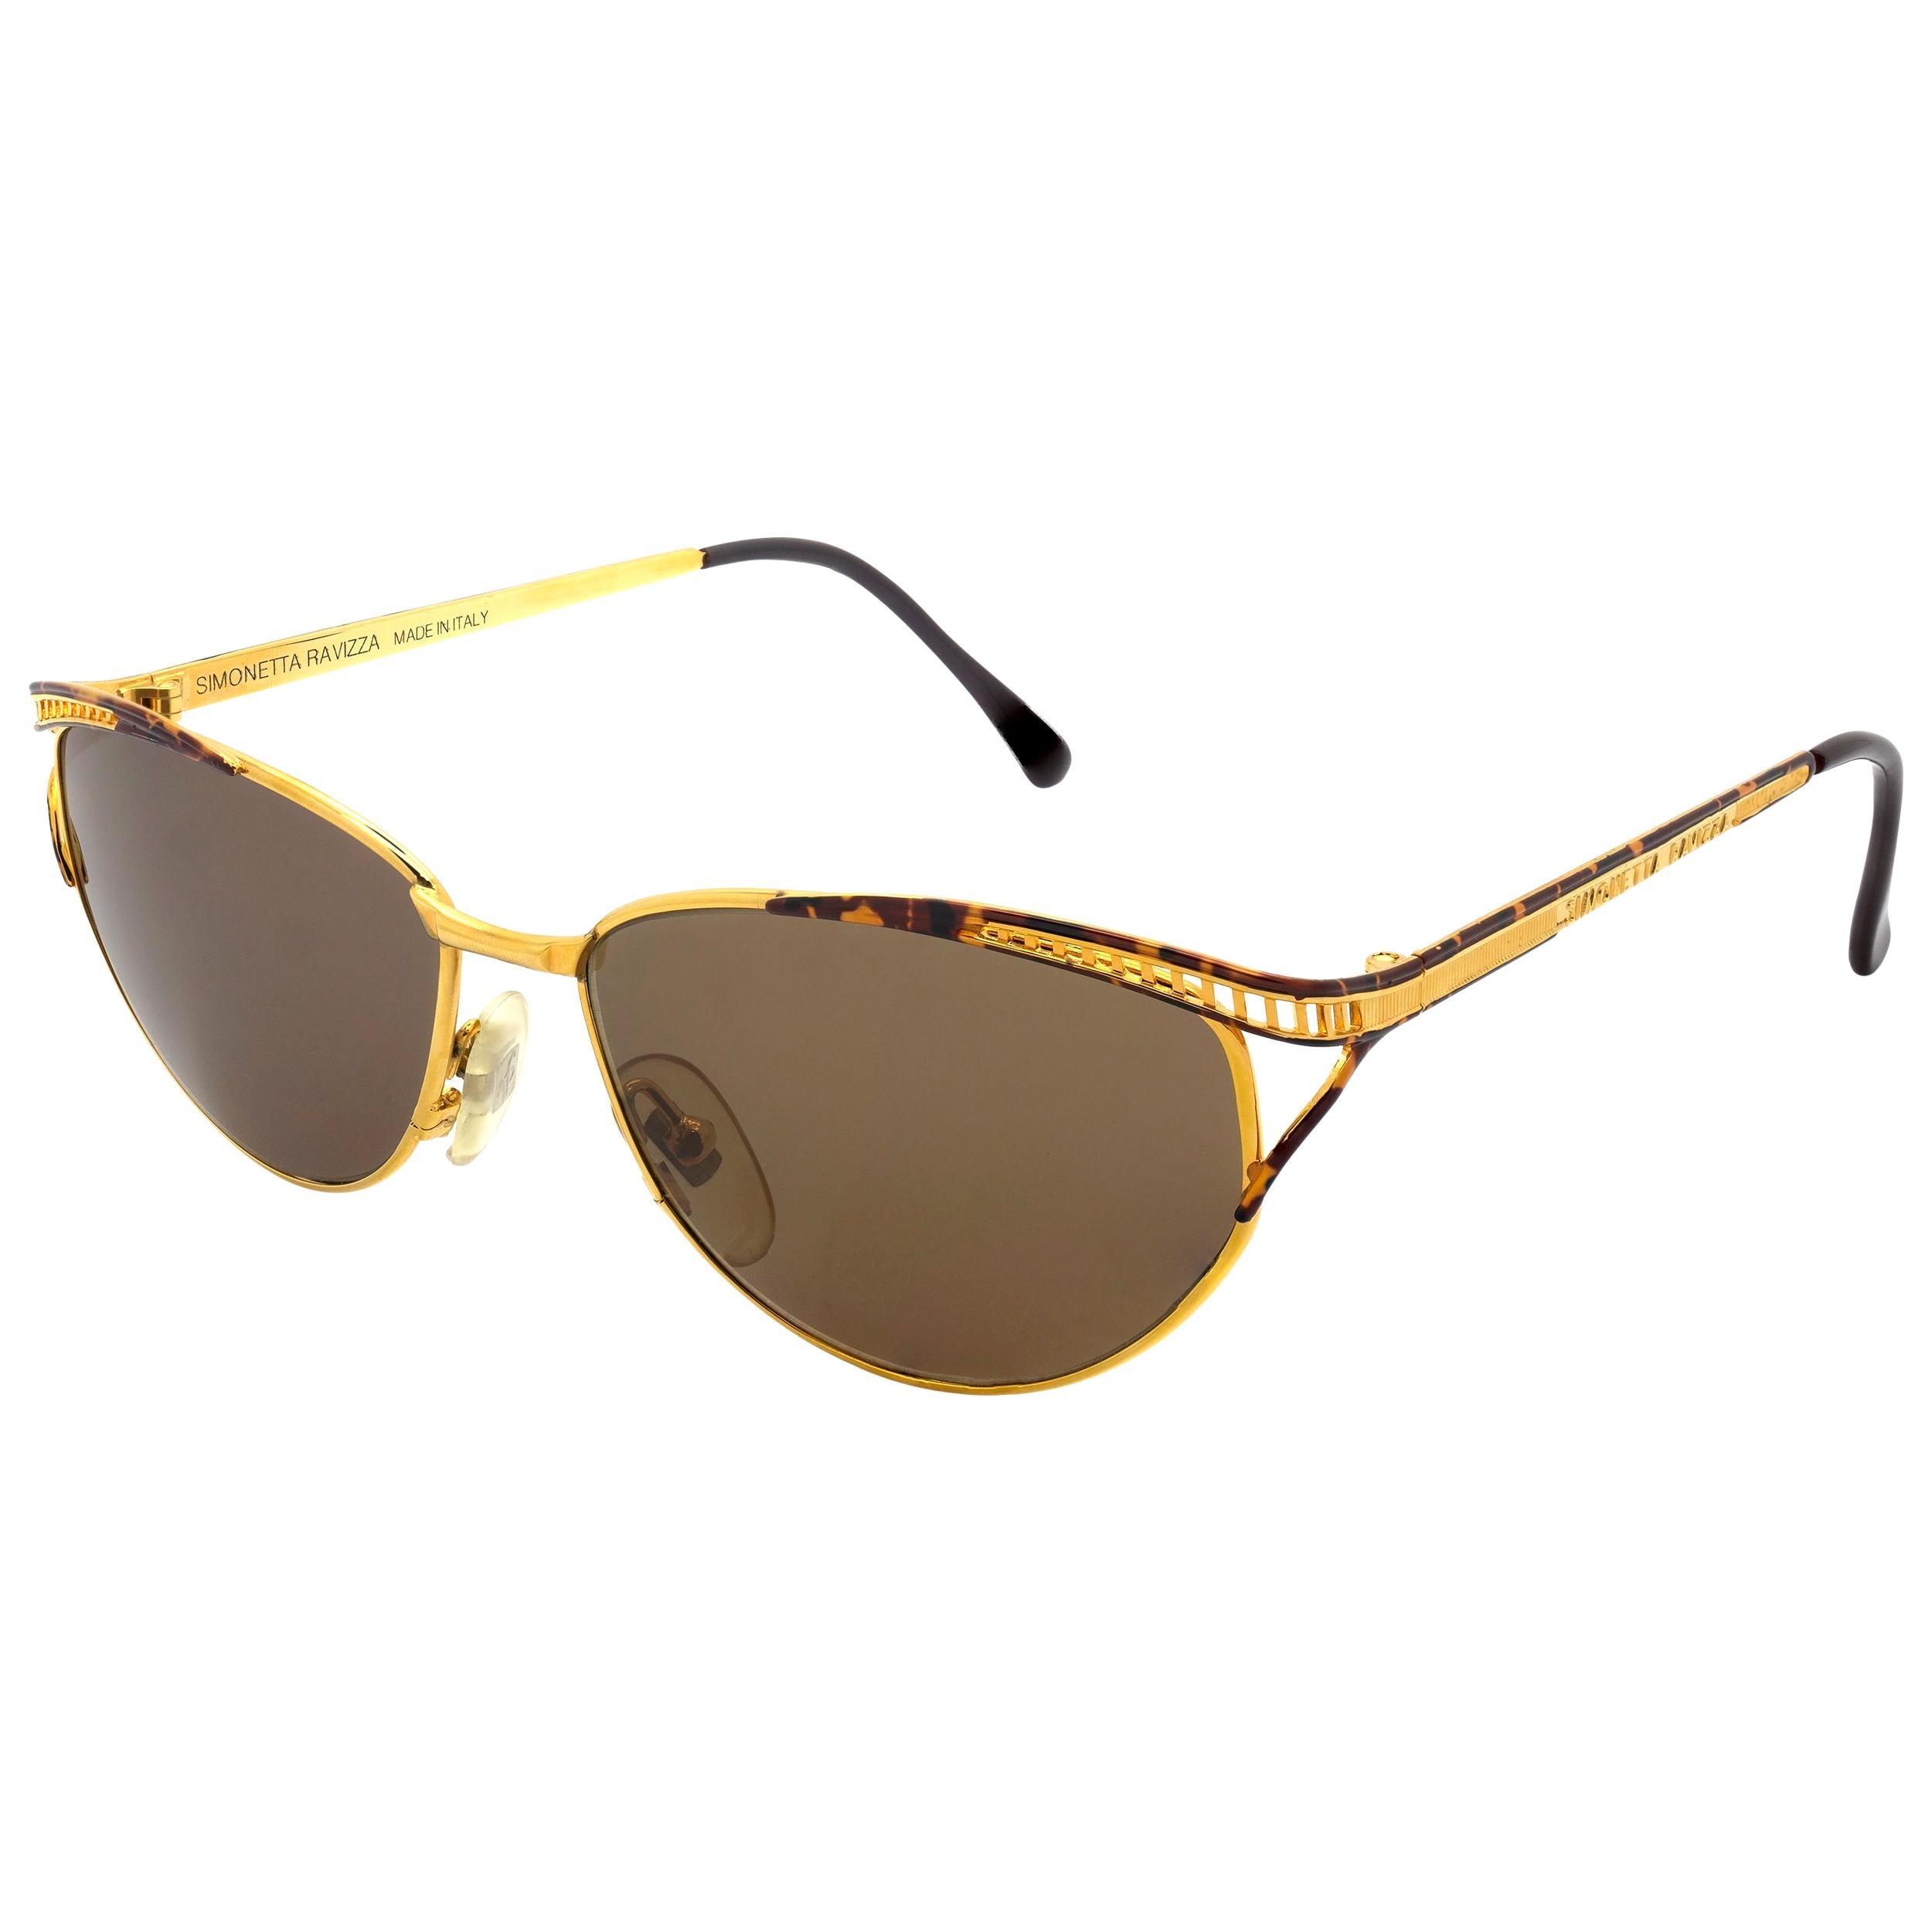 Simonetta Ravizza vintage golden cat eye sunglasses